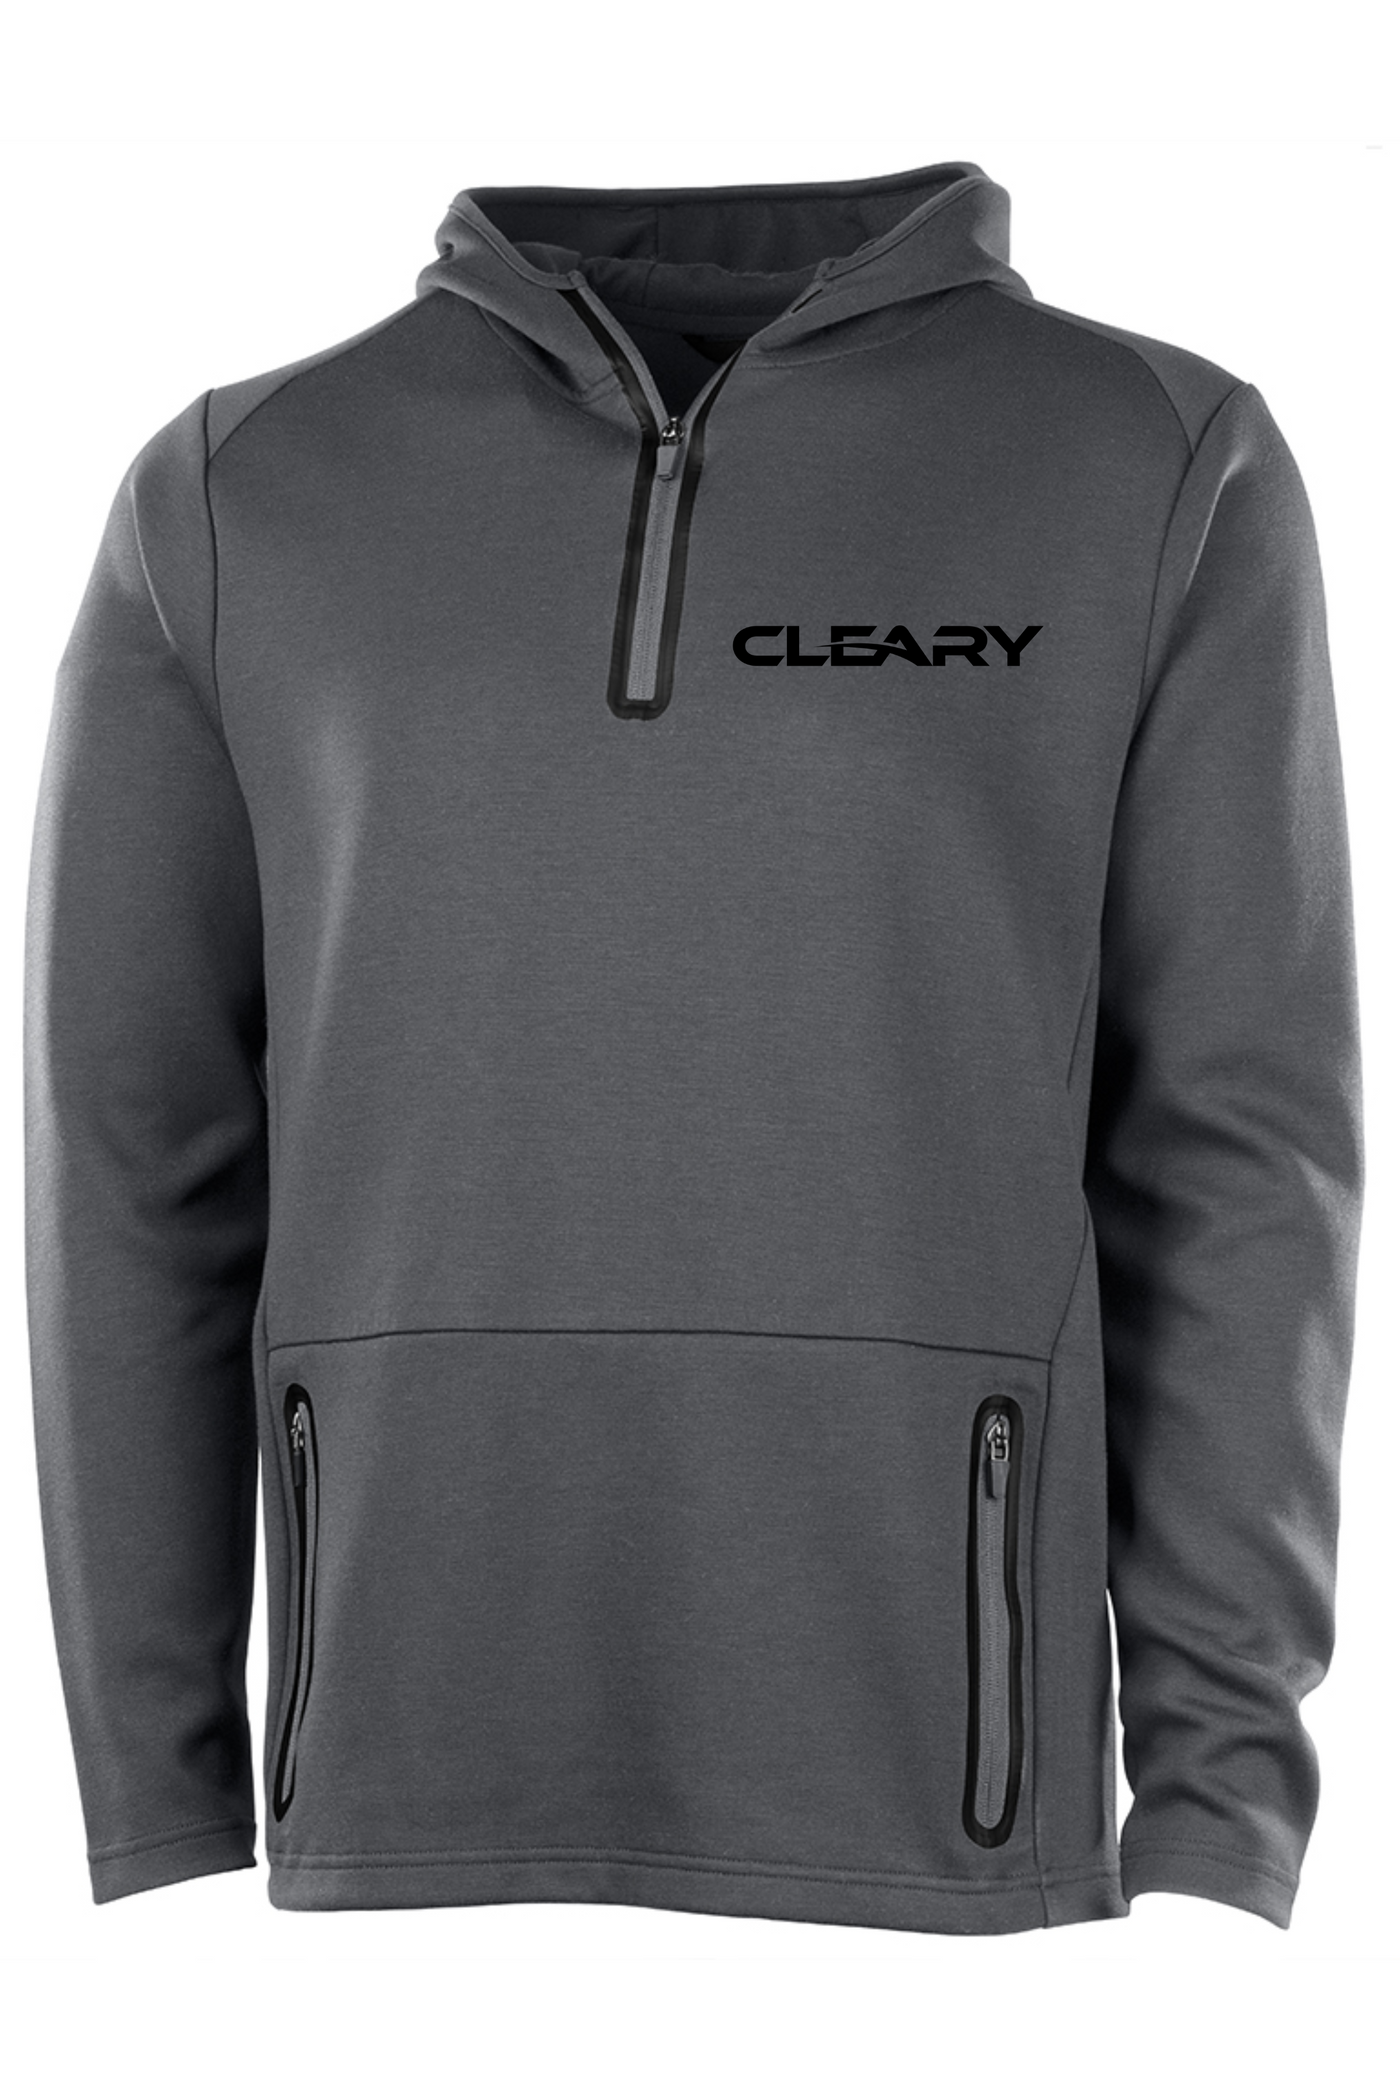 Cleary's Seaport Quarter Zip Hoodie Grey/Black